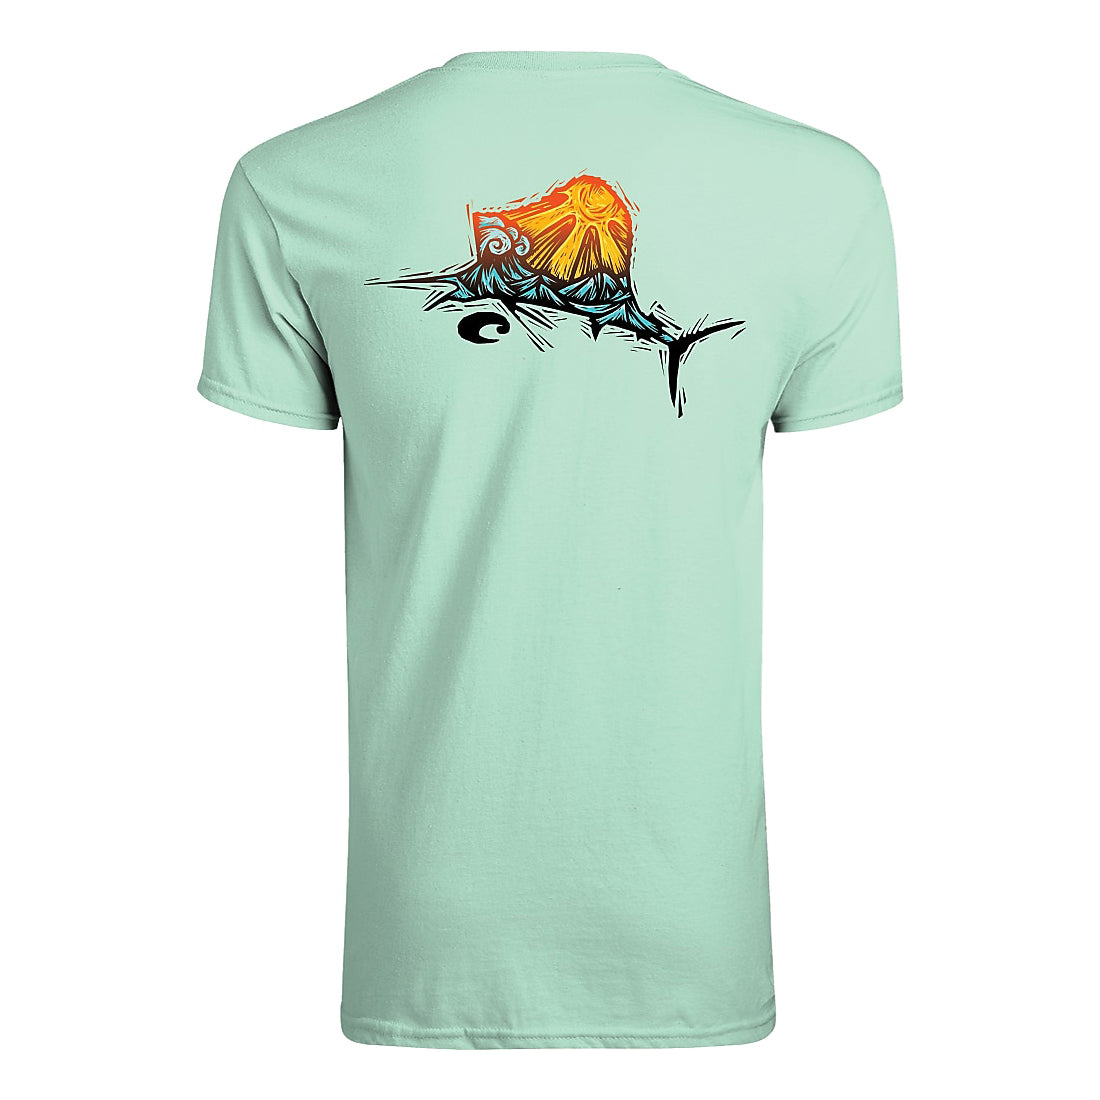 Costa Men's Sunrise Sail Short Sleeve T-Shirt from COSTA - CHAOS Fishing